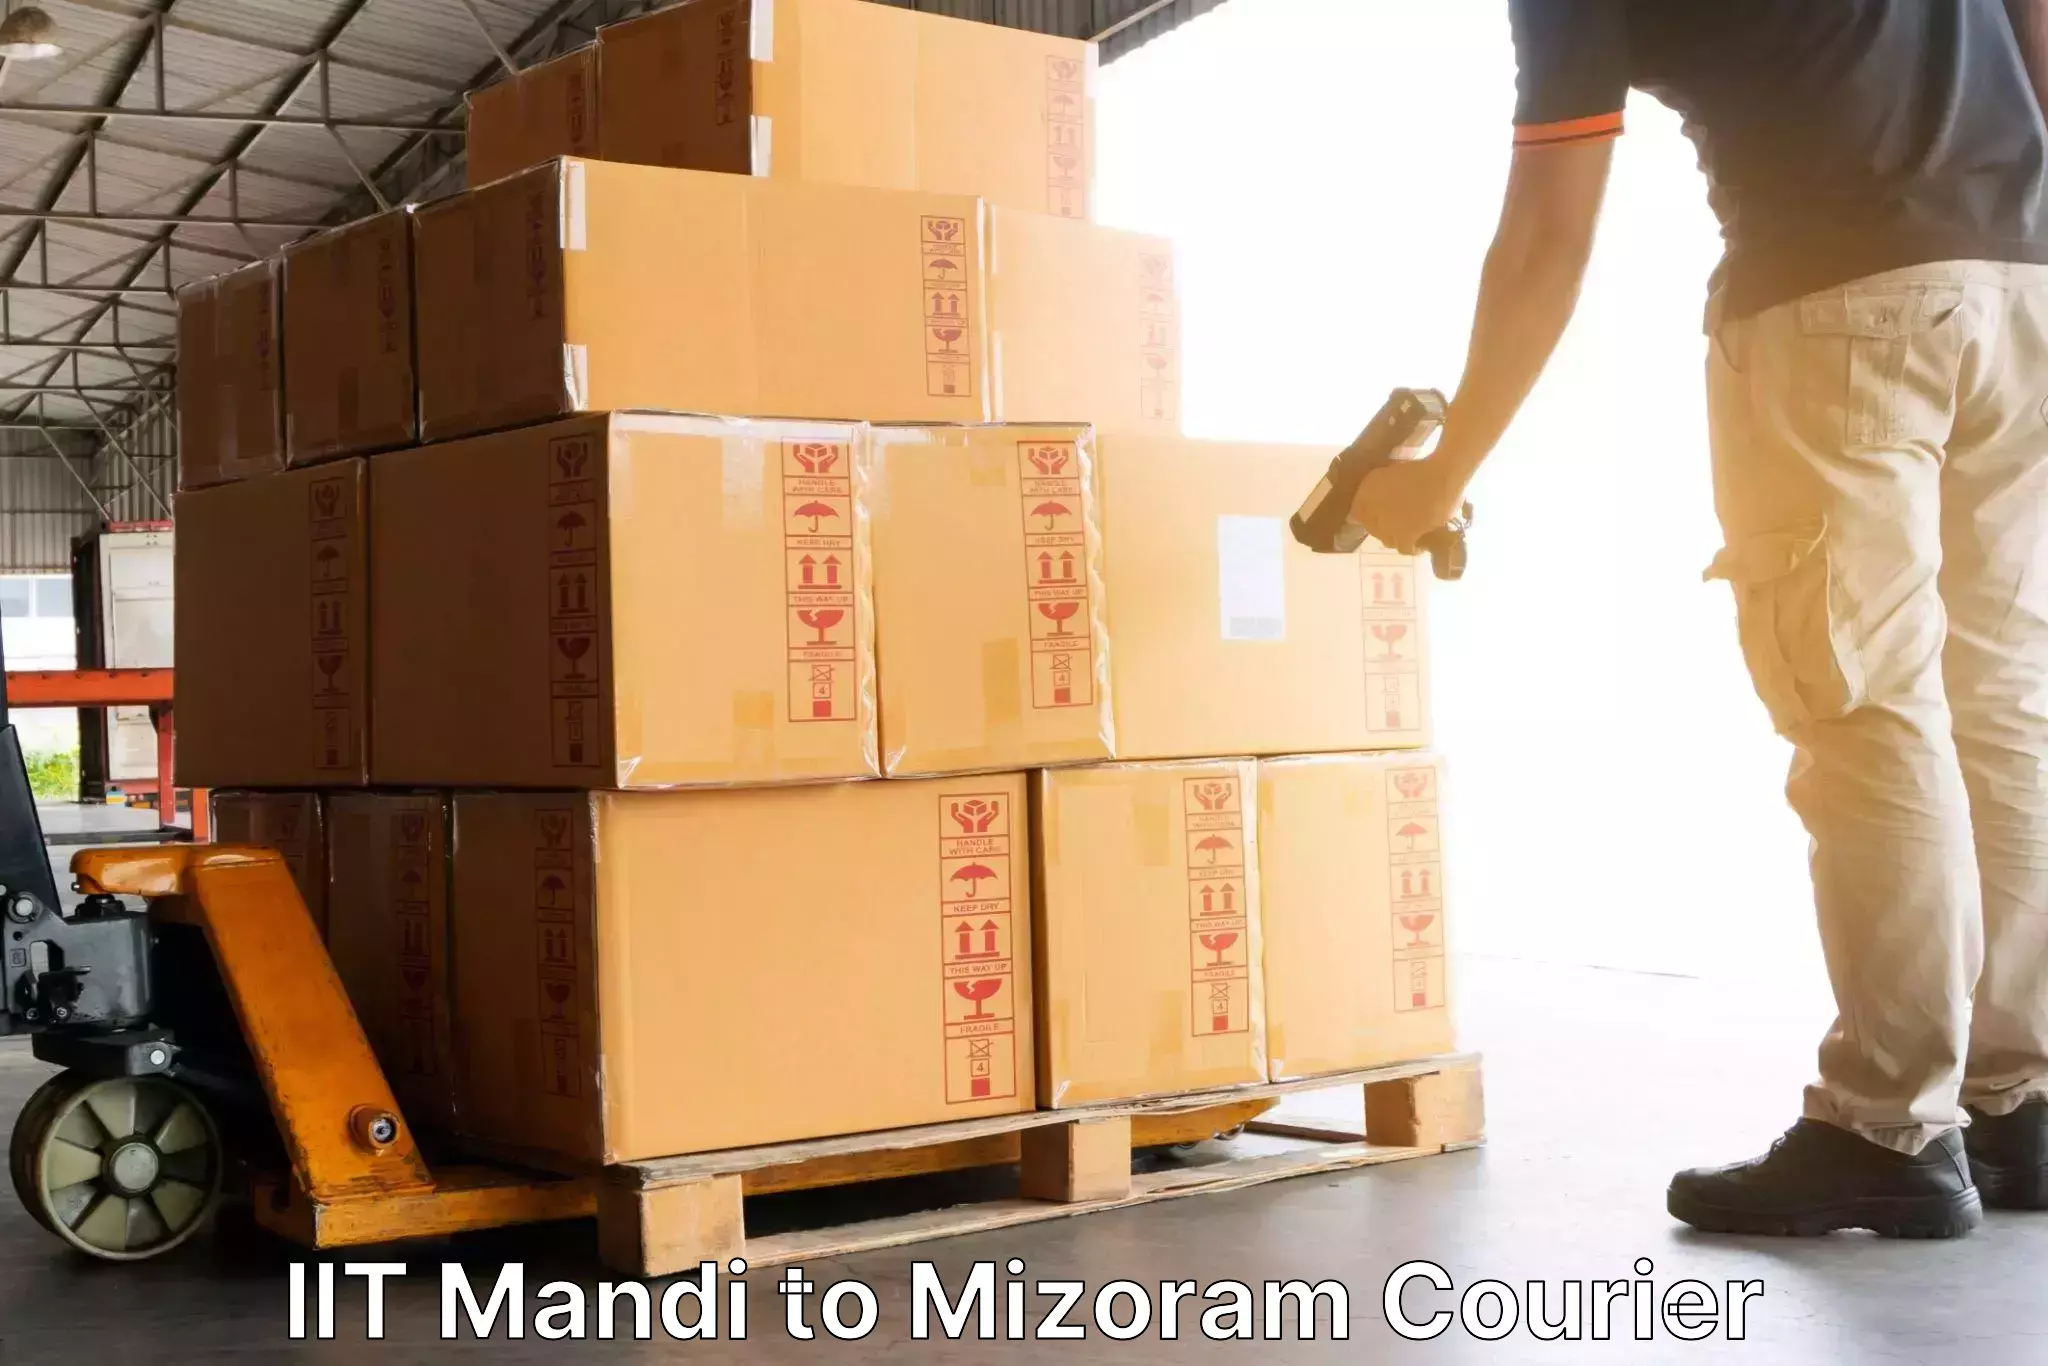 High-speed parcel service IIT Mandi to Mizoram